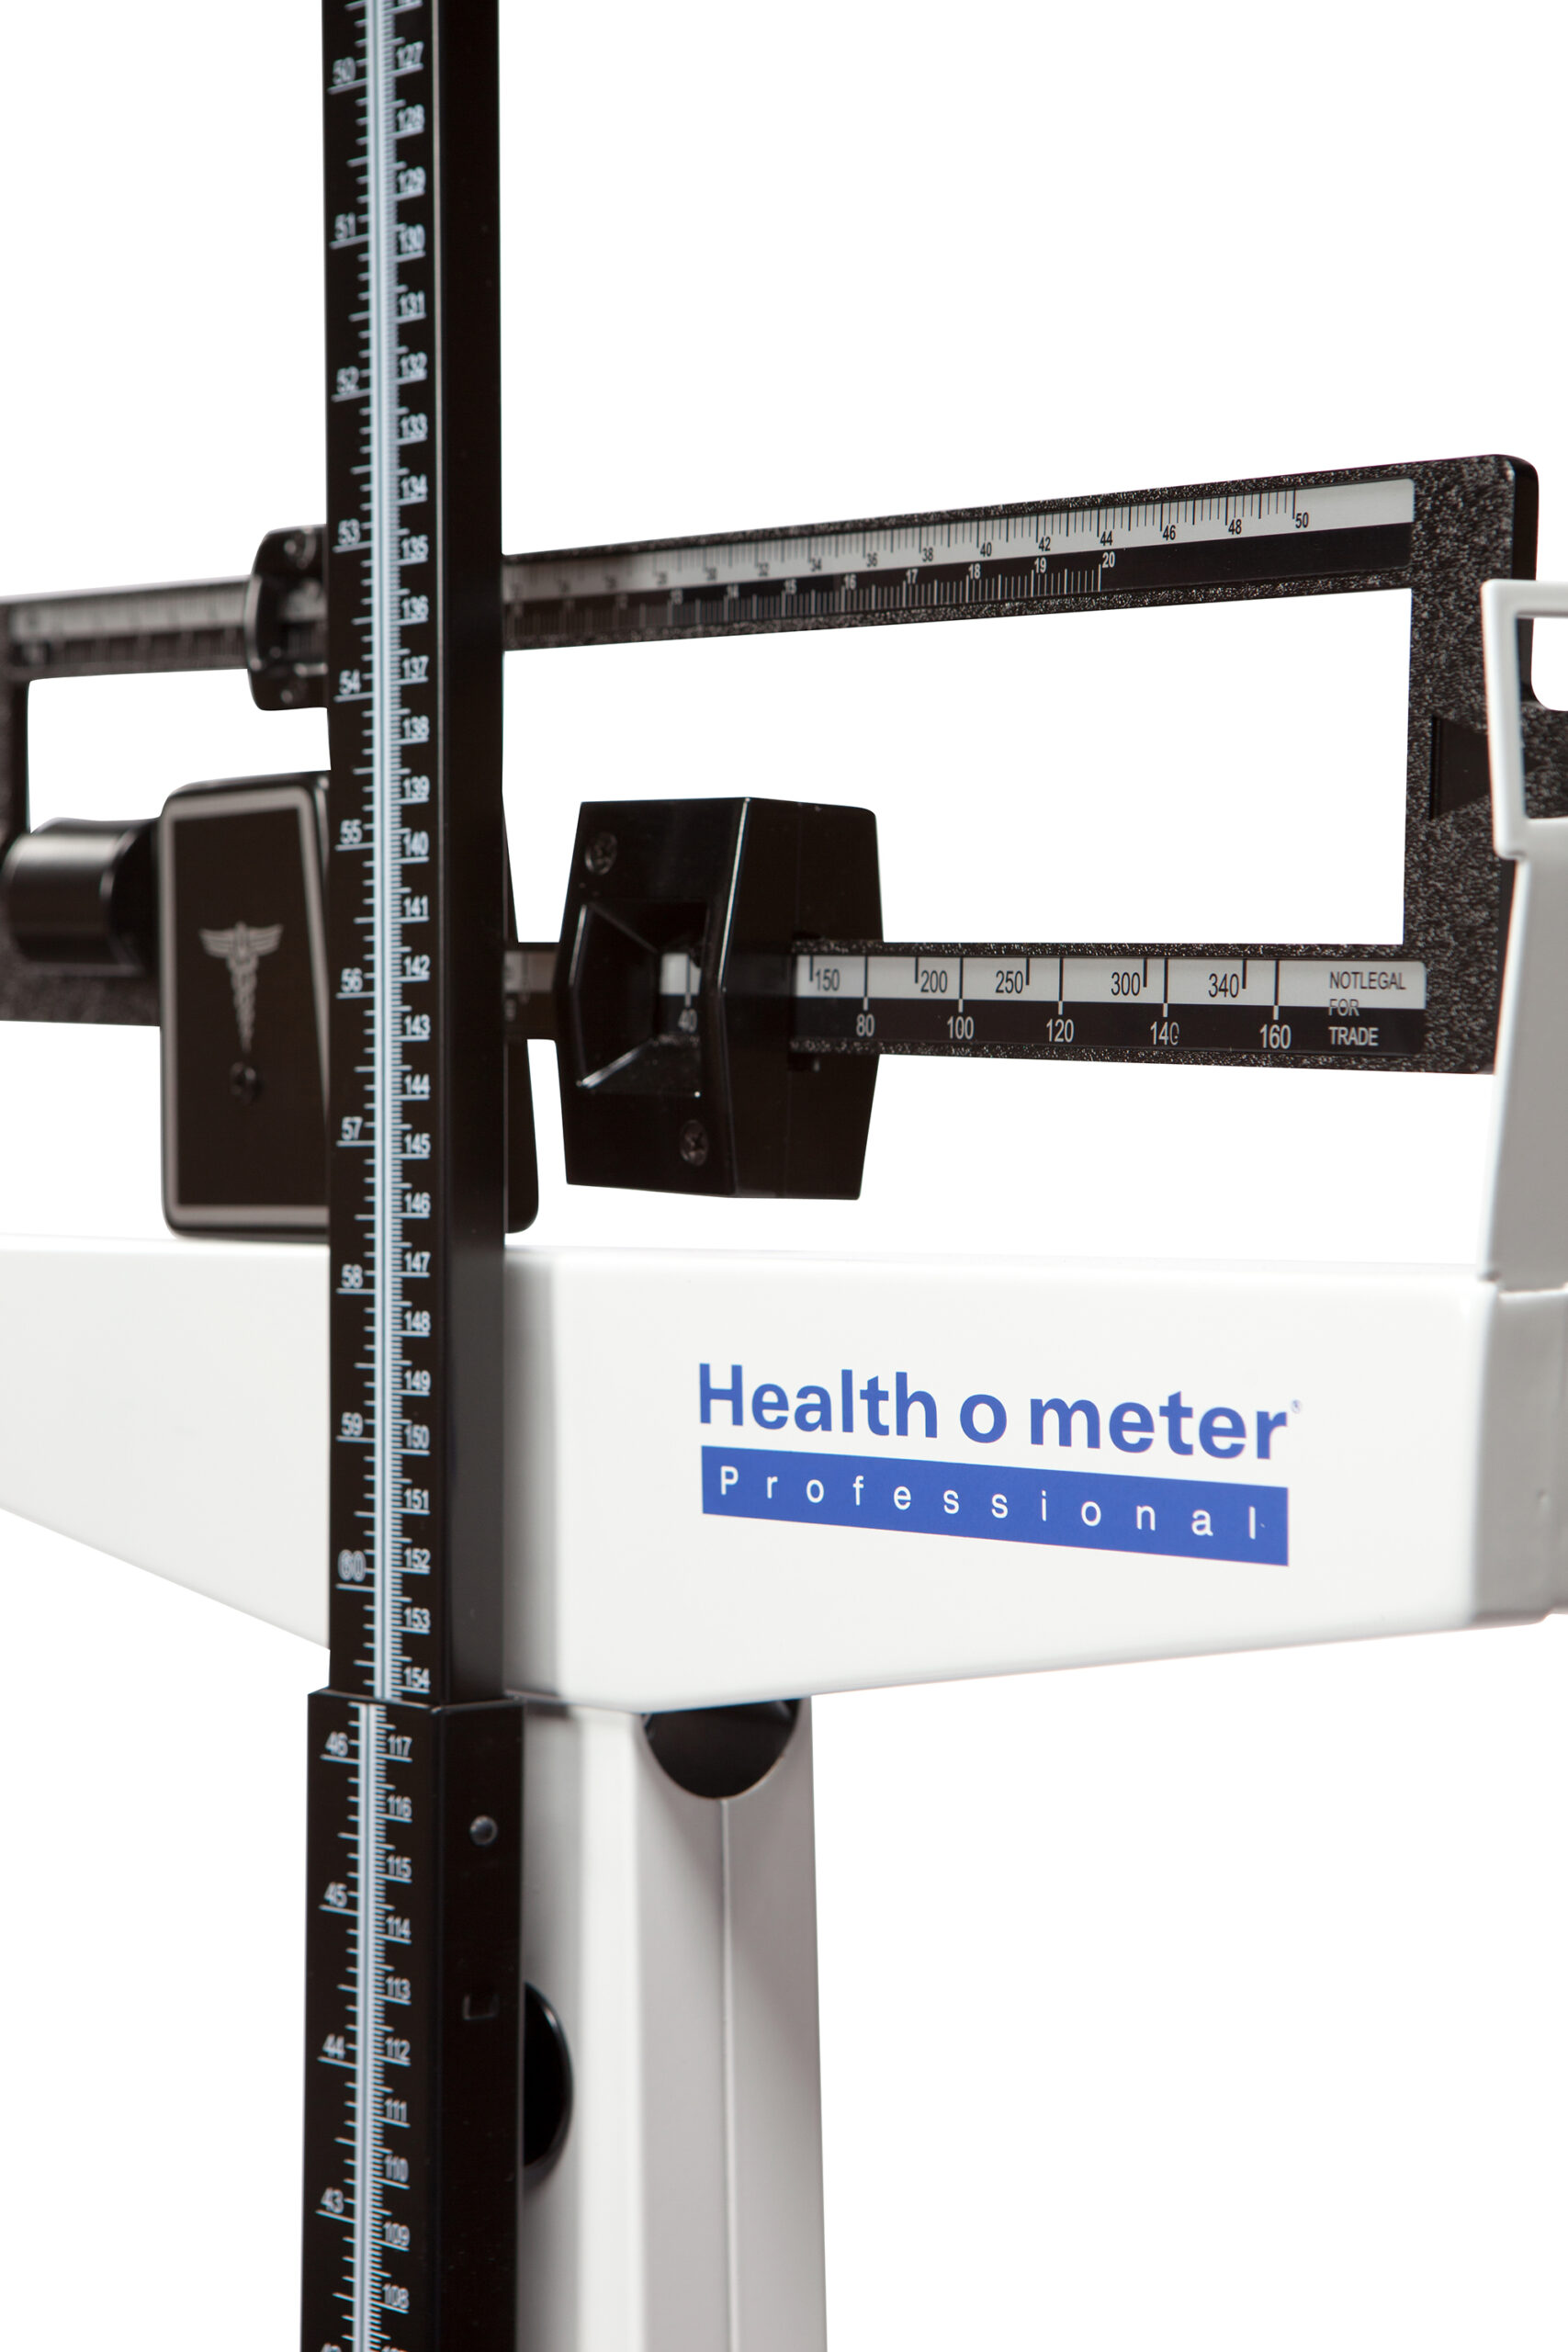 Health O Meter 402KL Eye Level Beam Physician Scale 390 x 1/4lb